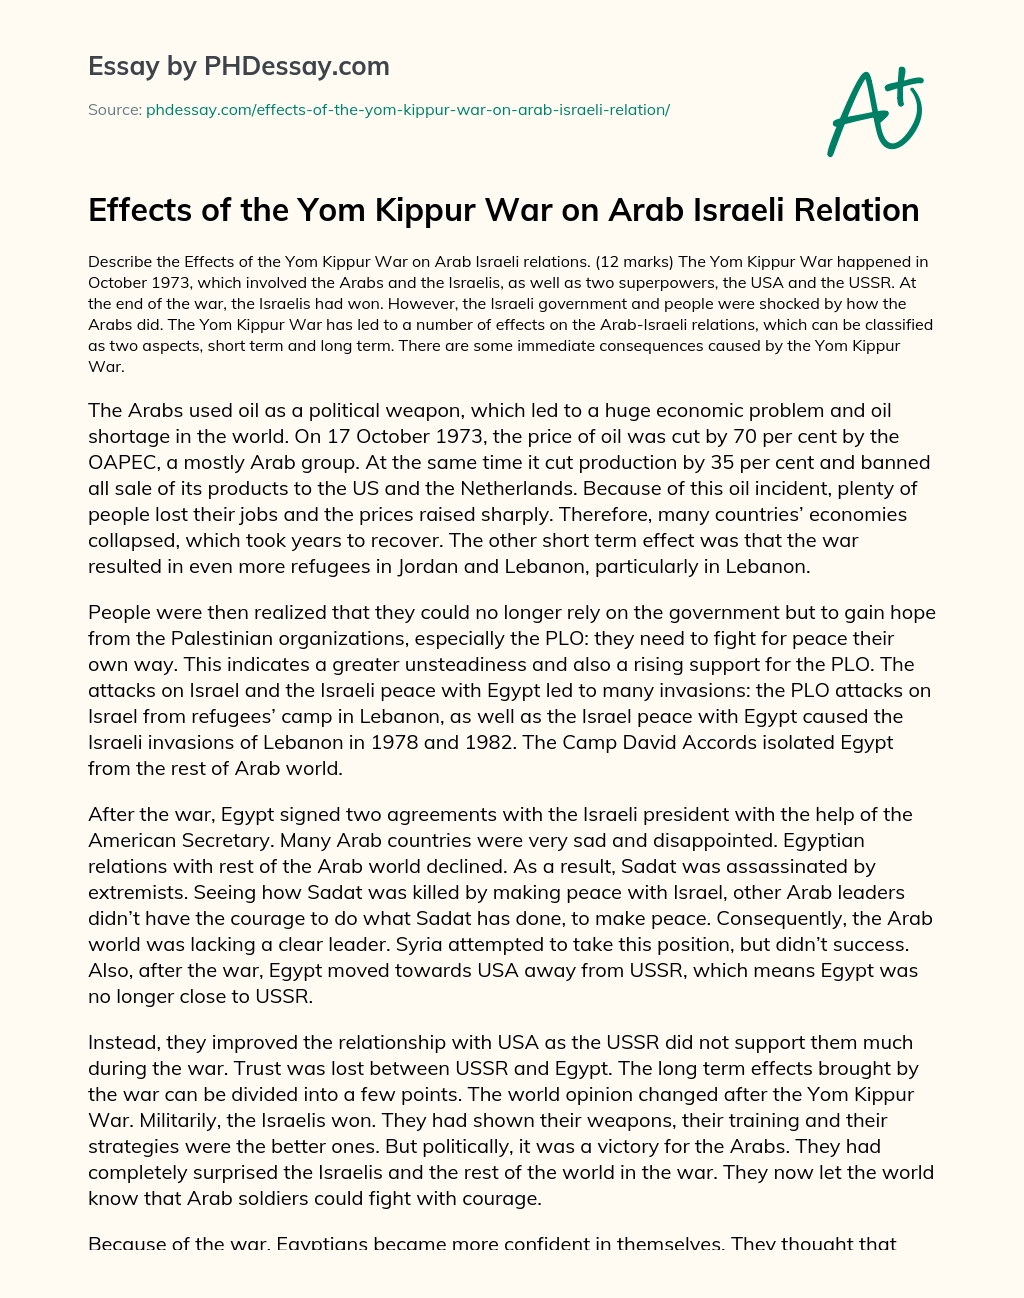 Effects of the Yom Kippur War on Arab Israeli Relation essay